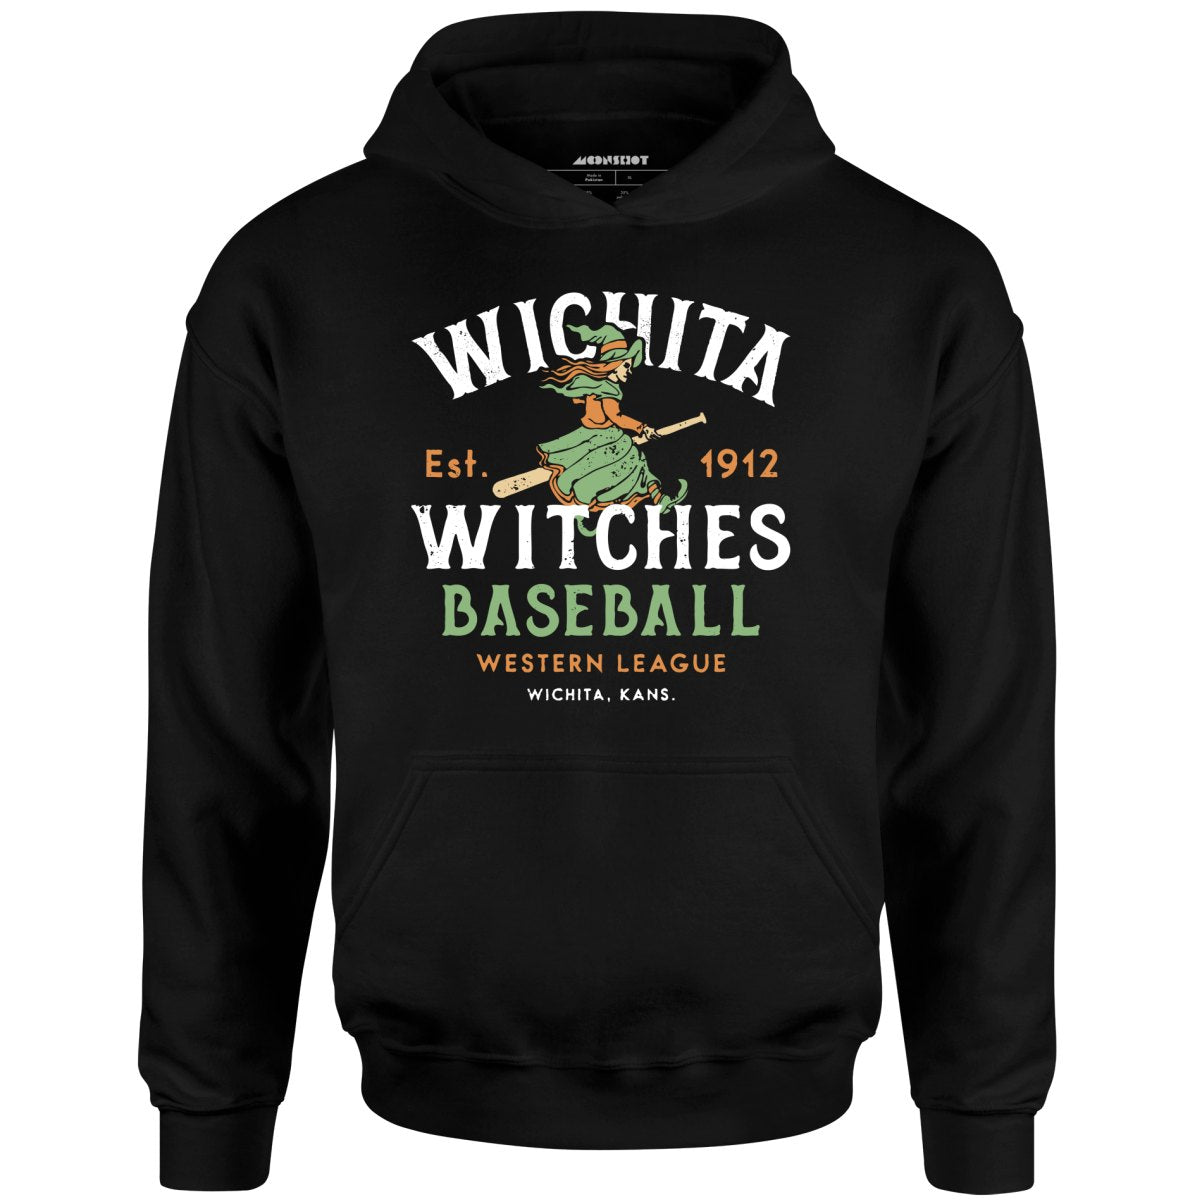 Wichita Witches - Kansas - Vintage Defunct Baseball Teams - Unisex Hoodie